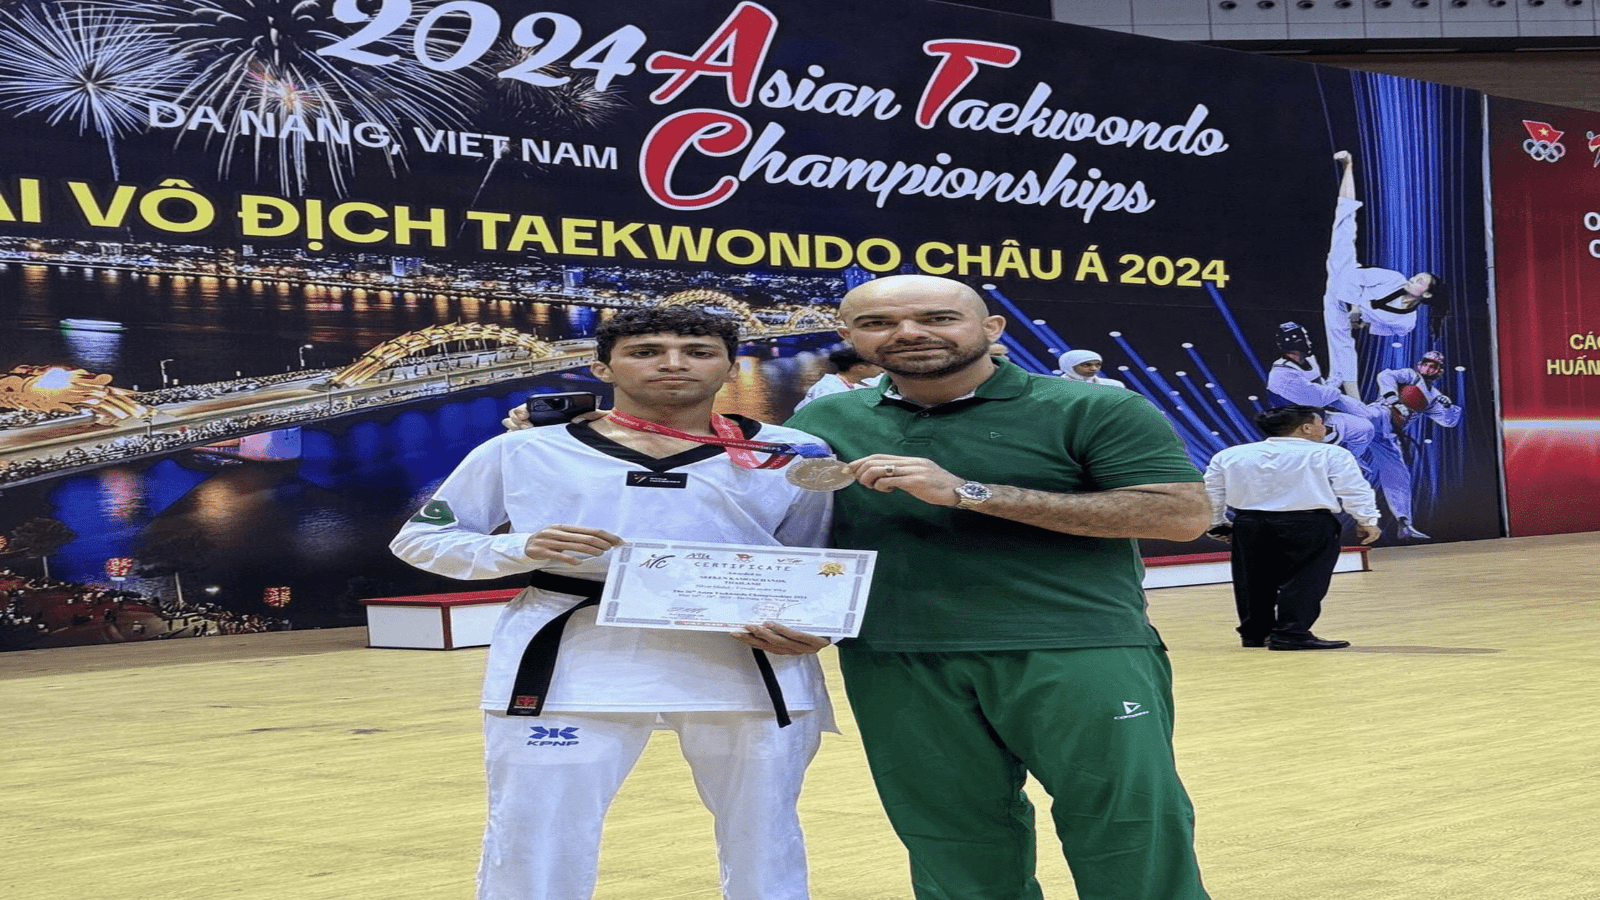 Asian Taekwondo Championship: Pak’s Shahzaib Khan makes history with silver medal